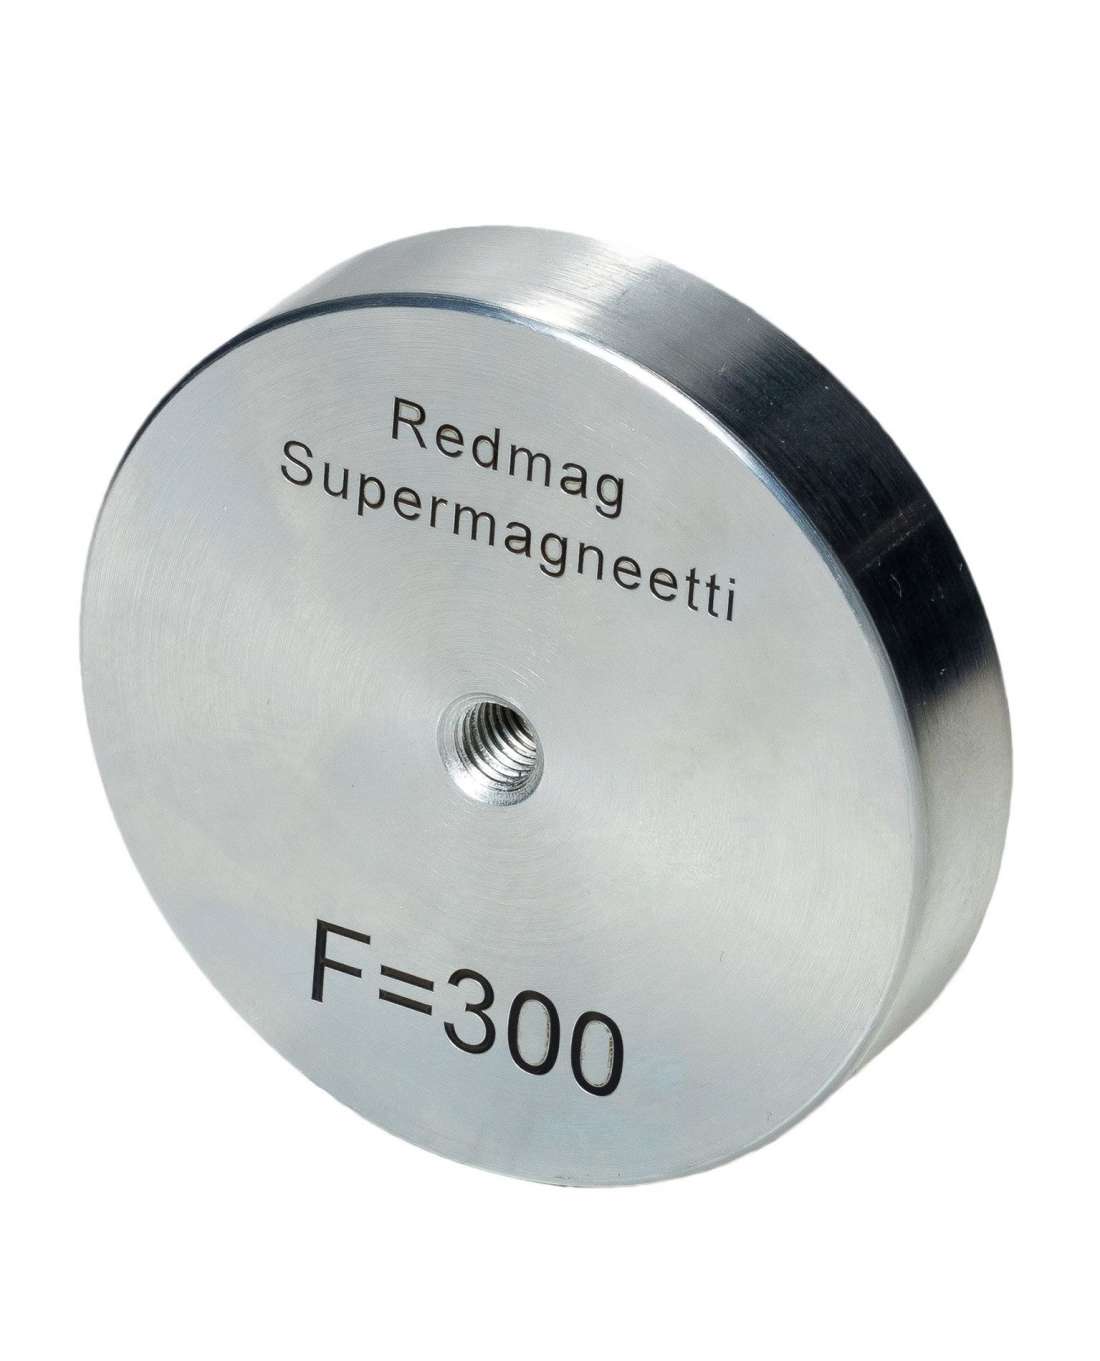 Redmag Supermagneetti F300 (300 kg, 95 mm)